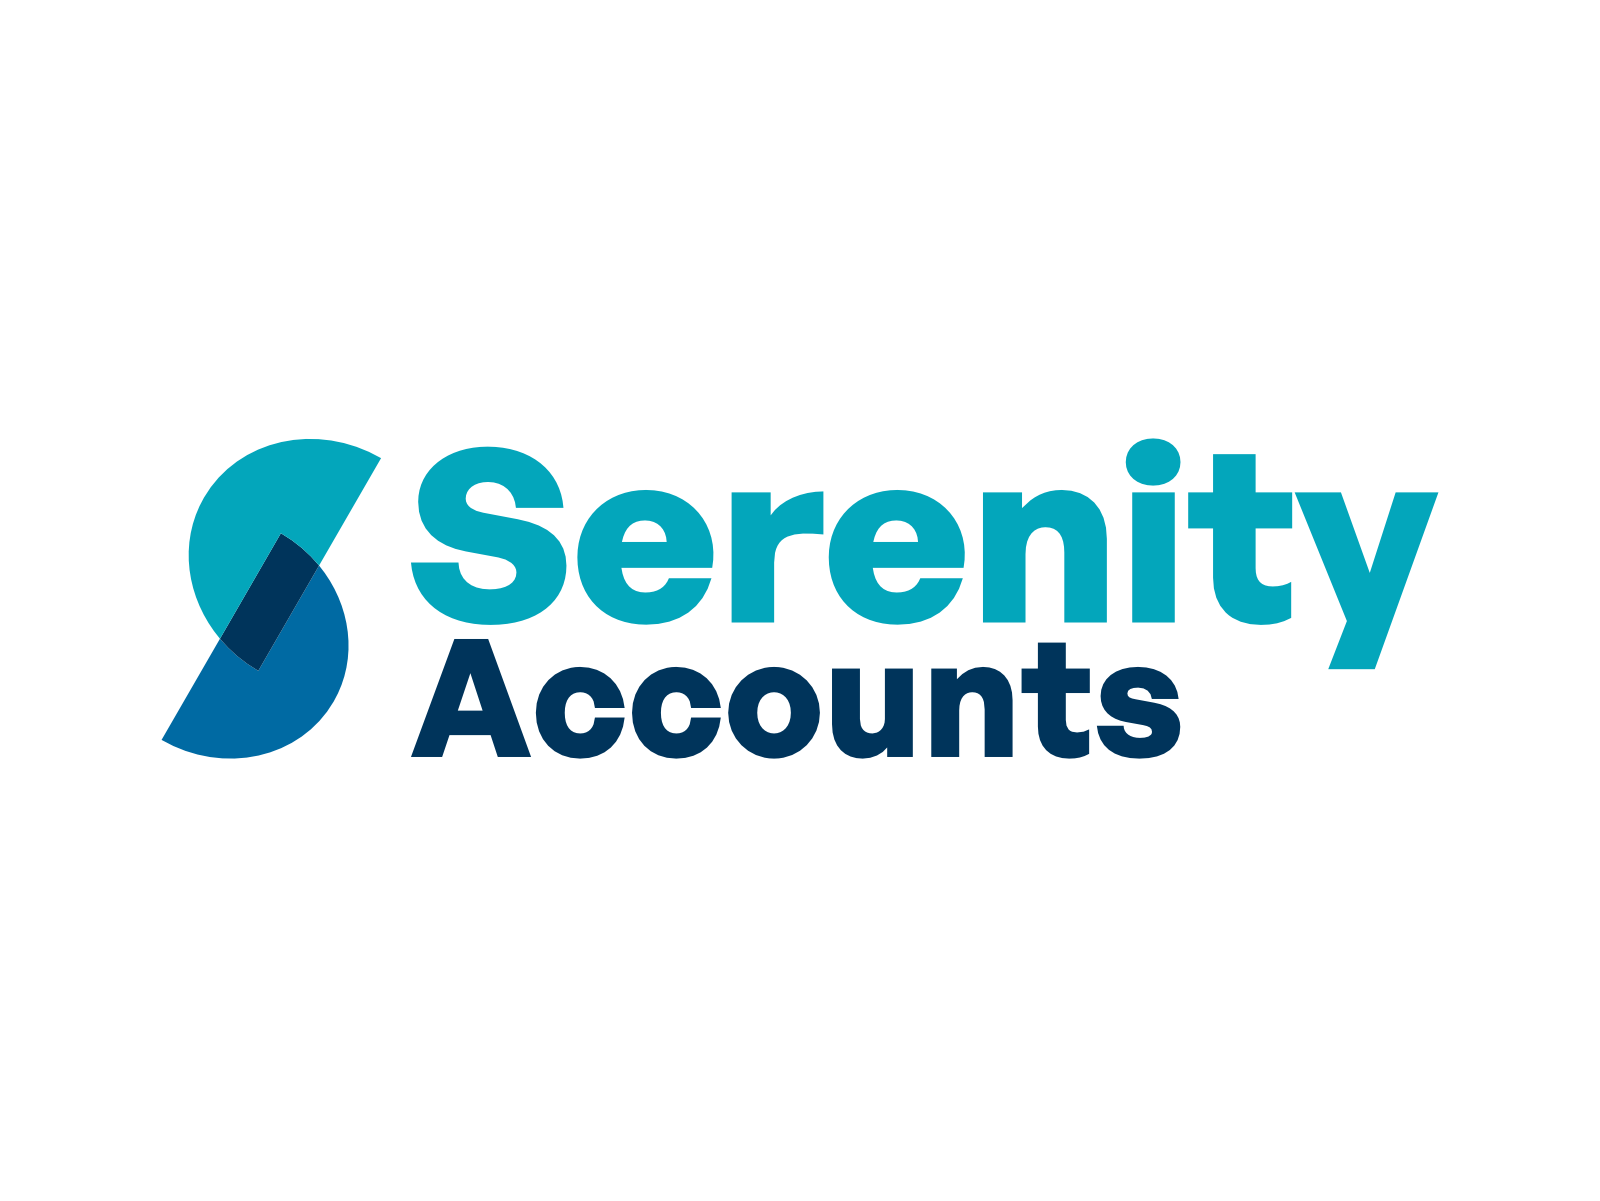 Work image #1 for Serenity Accounts branding